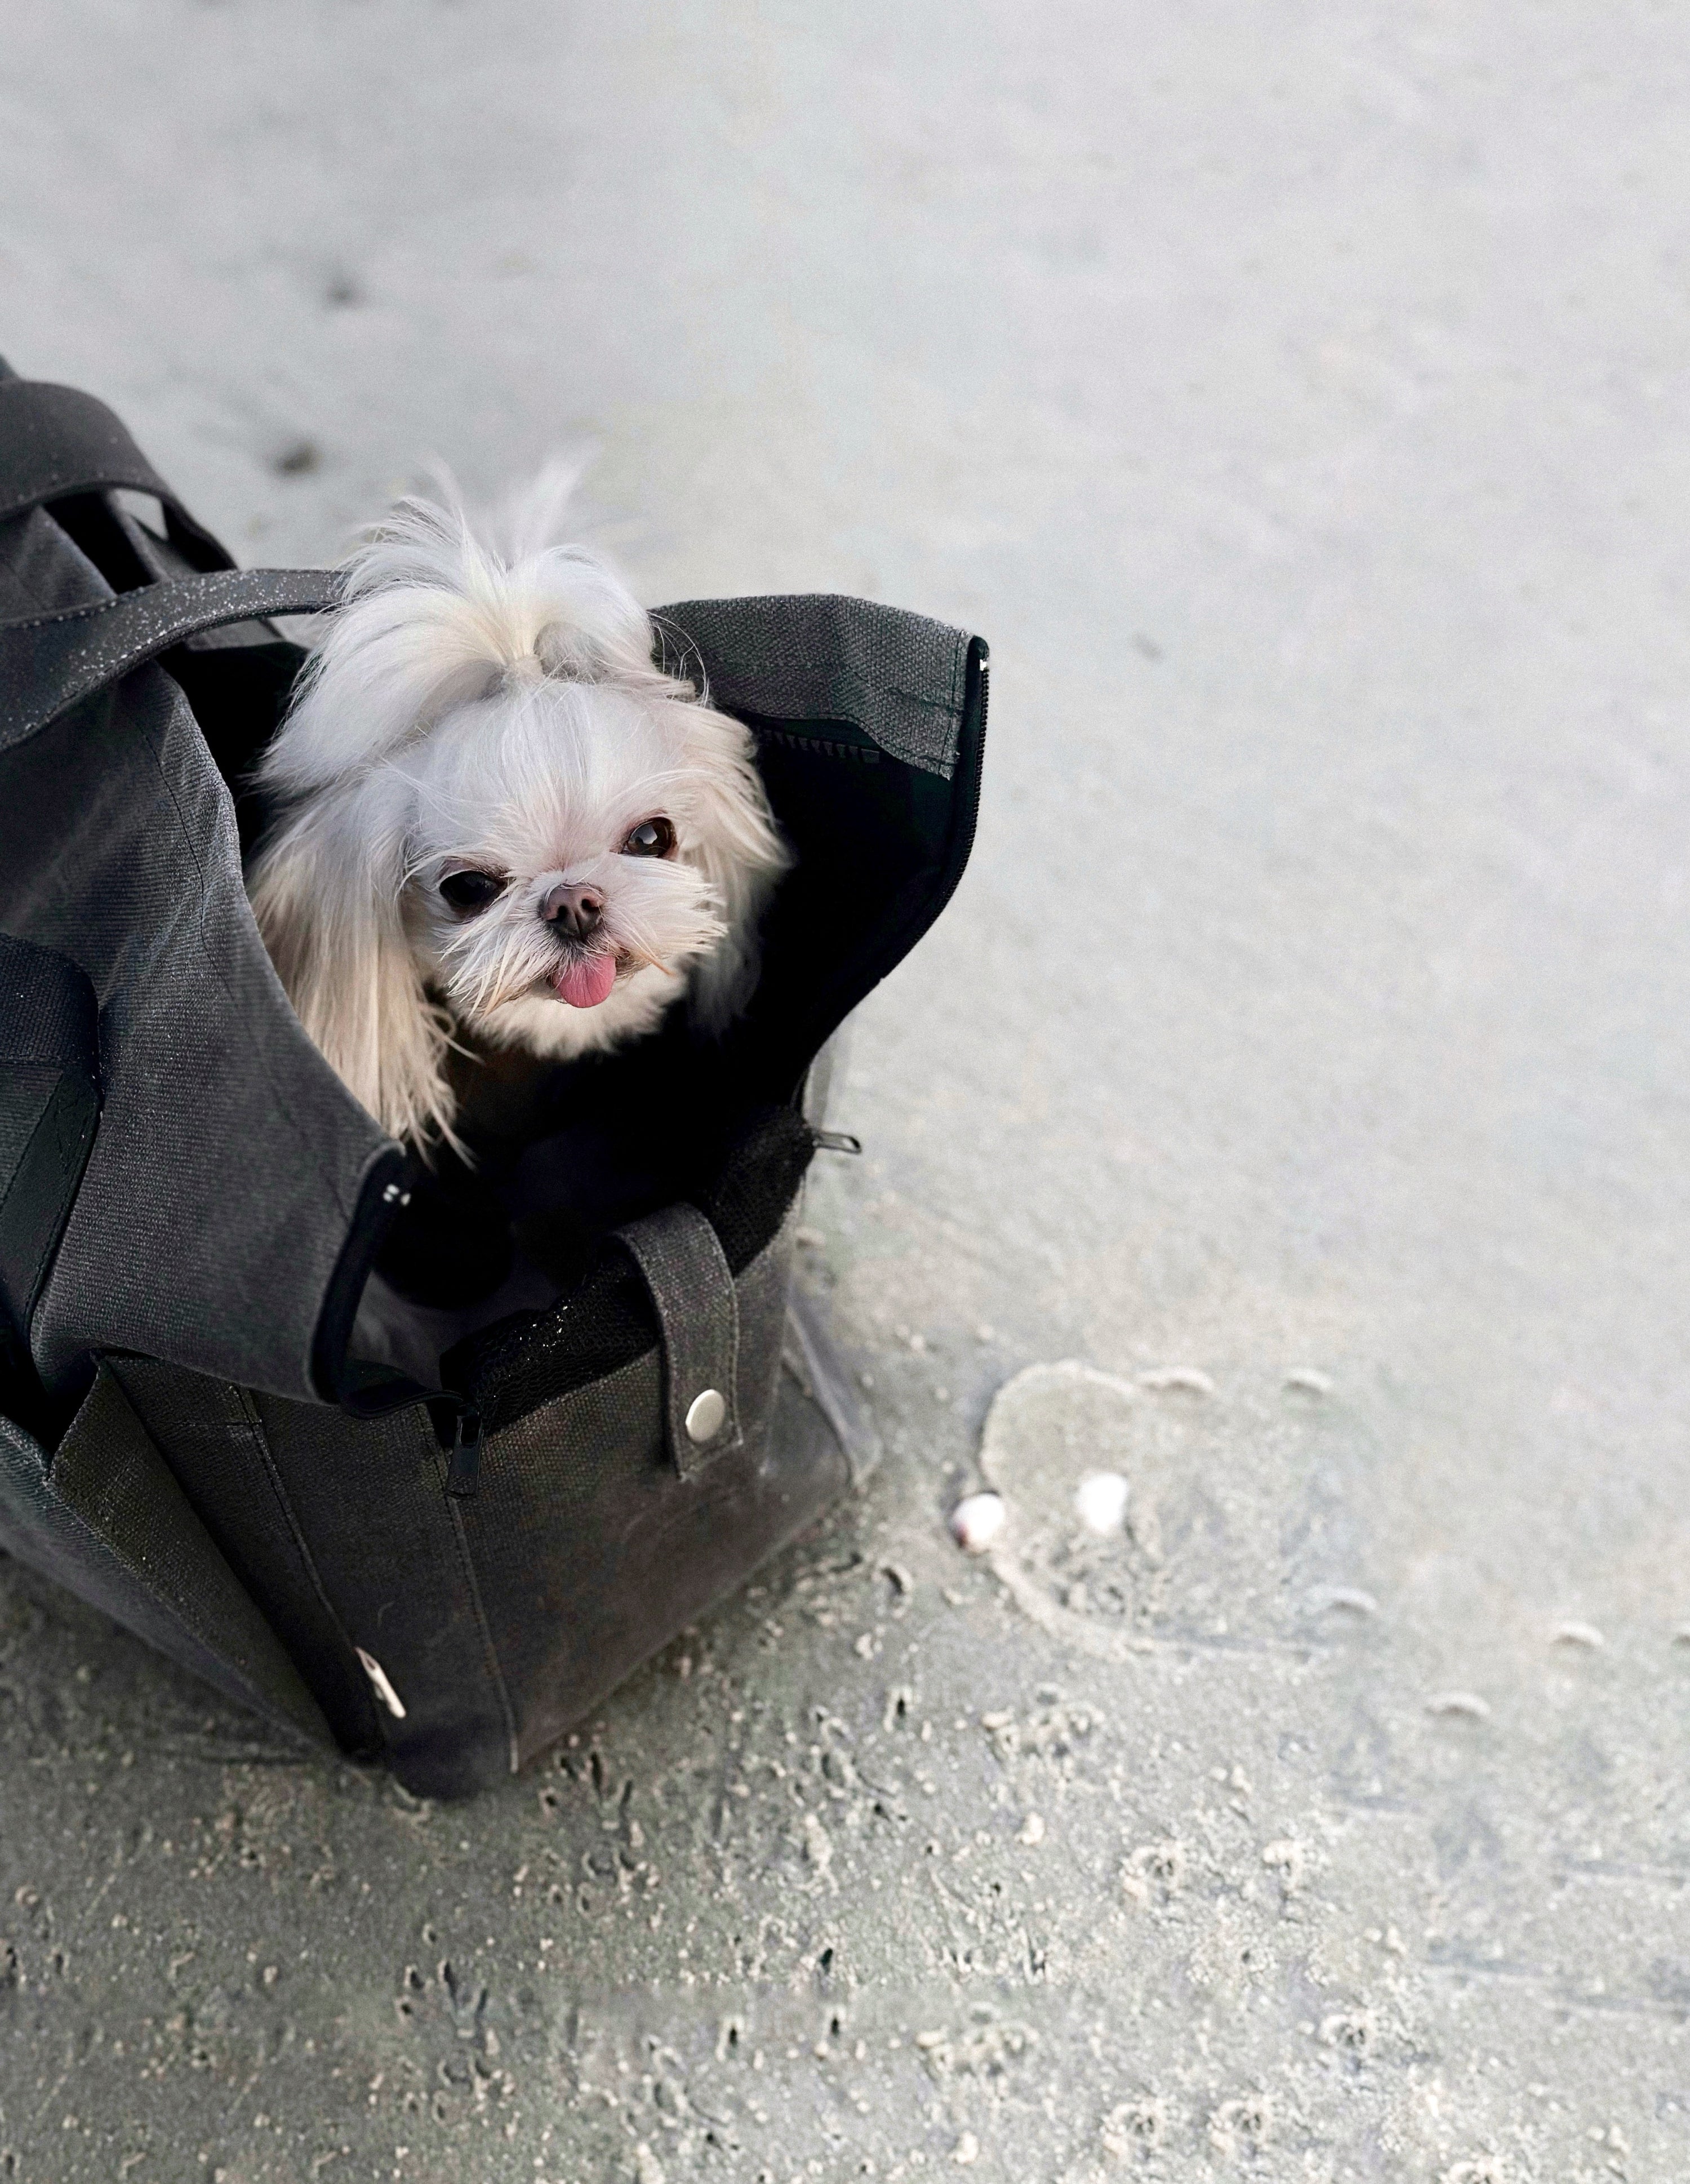 Marlowe Pet Carrier Bag